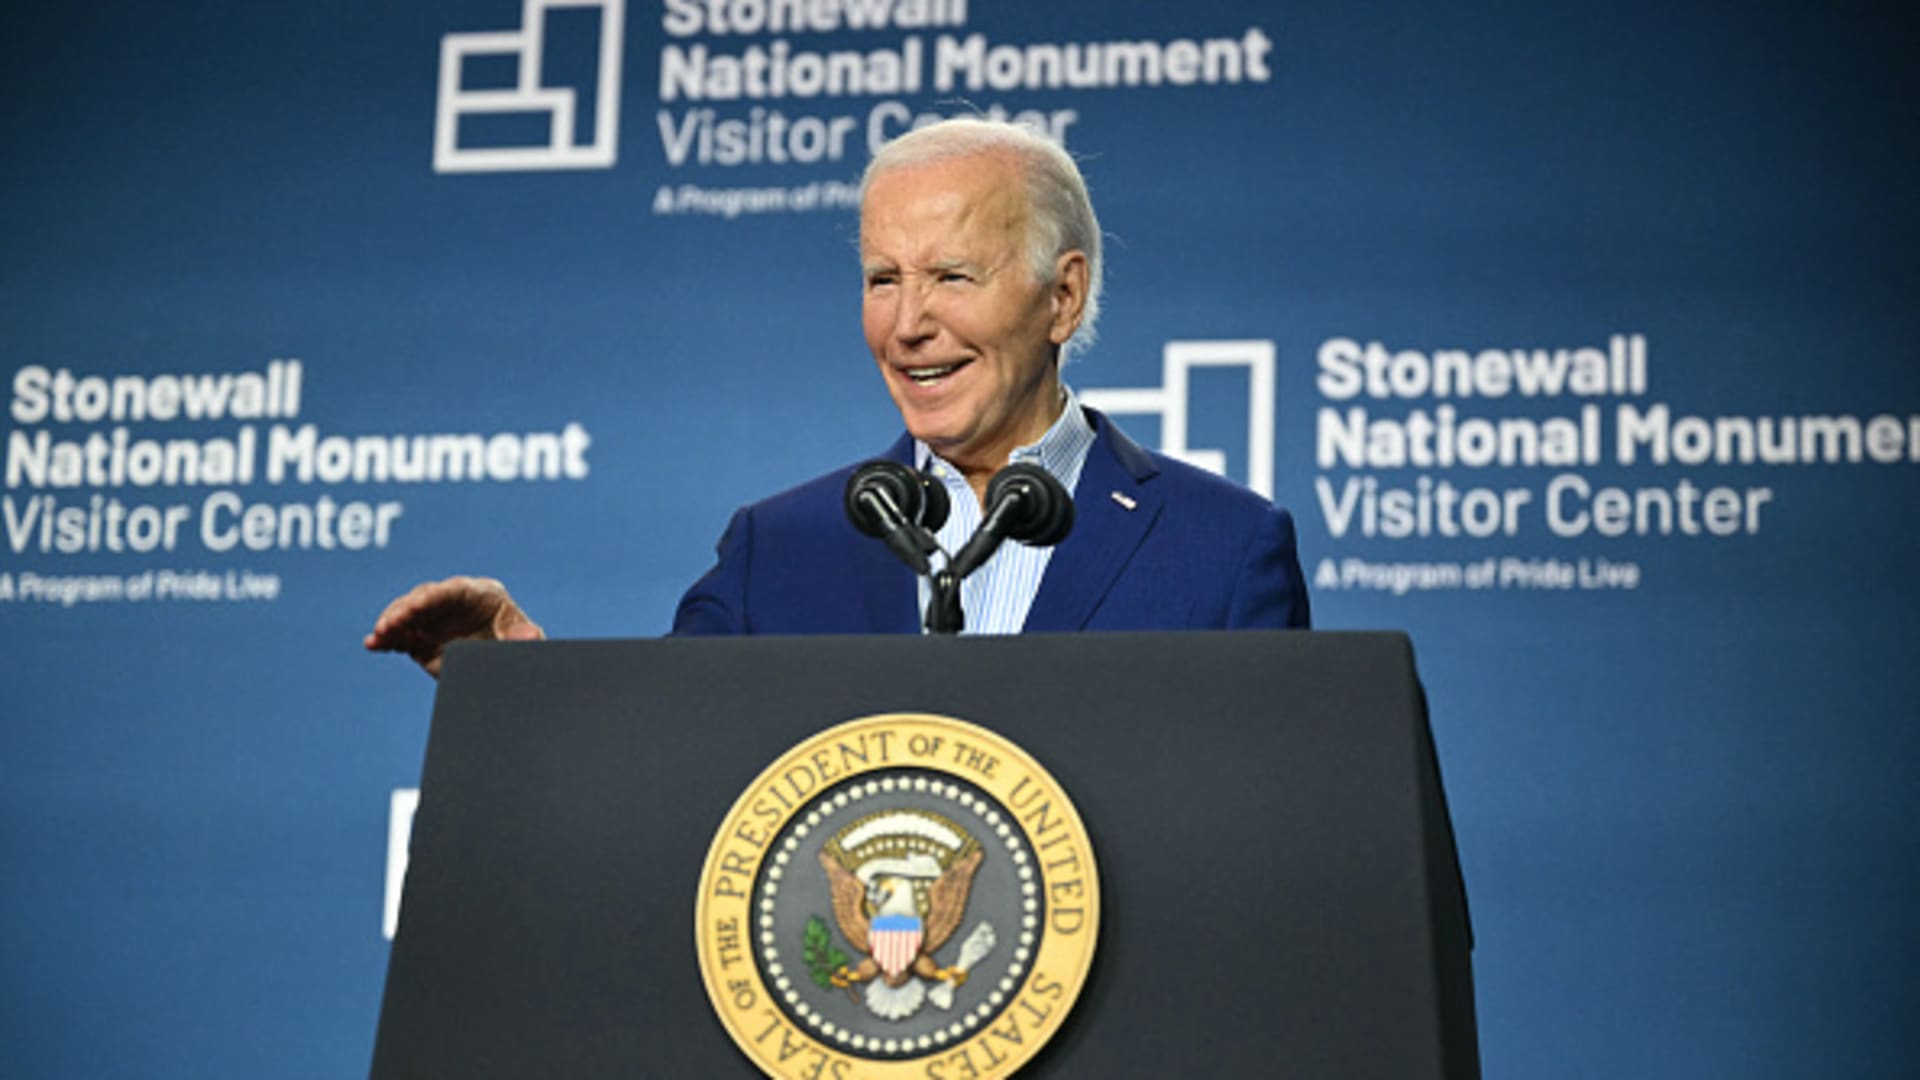 Biden campaign raises $27 million after first debate